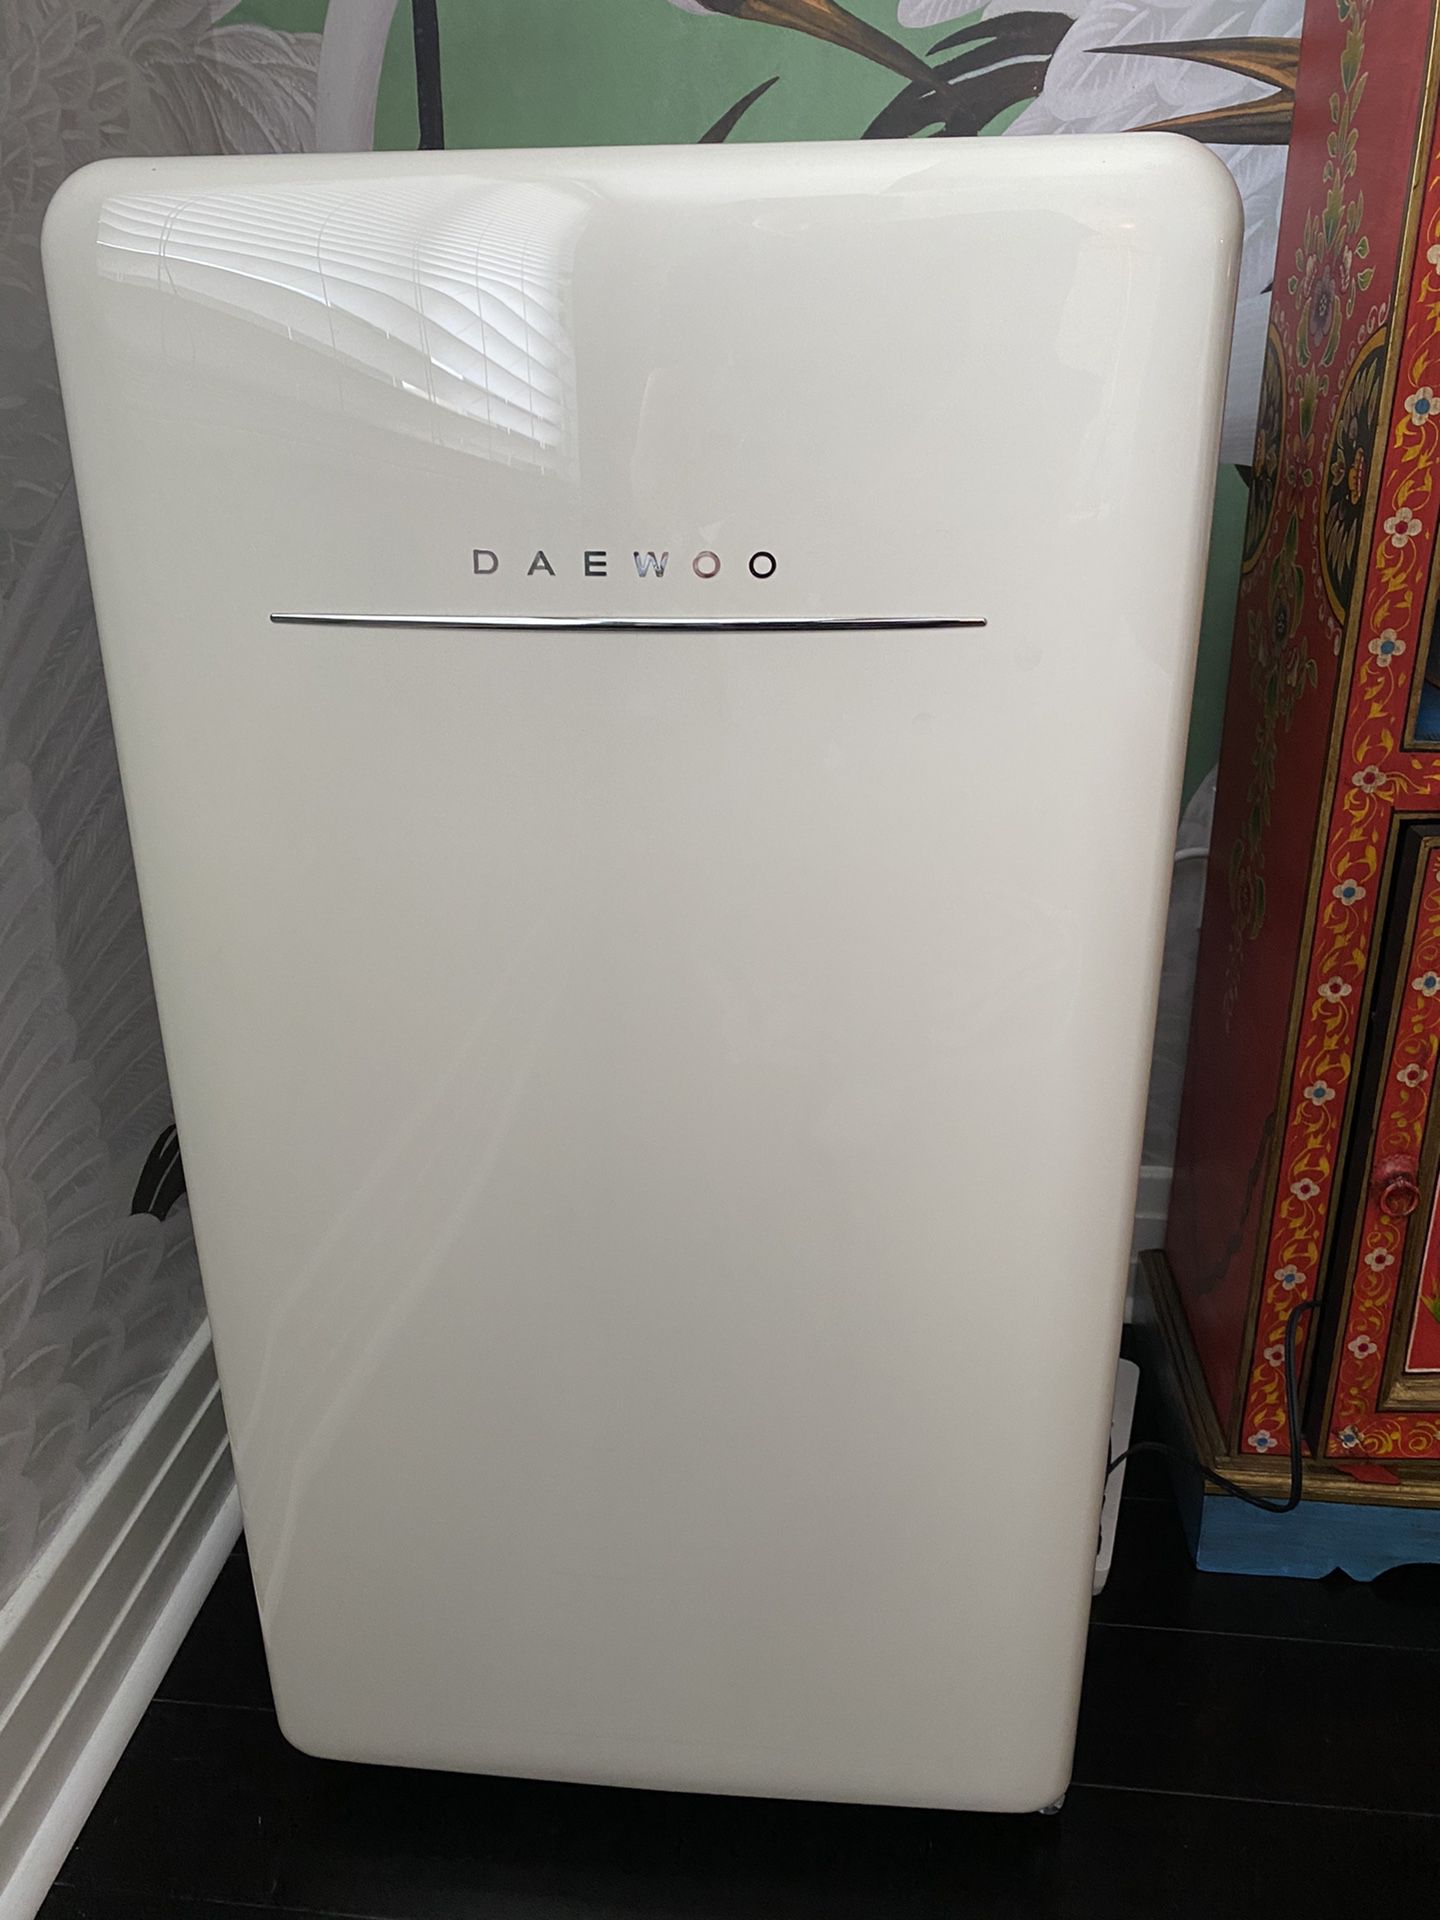 Daewoo retro compact fridge brand new (4.4 cu ft)